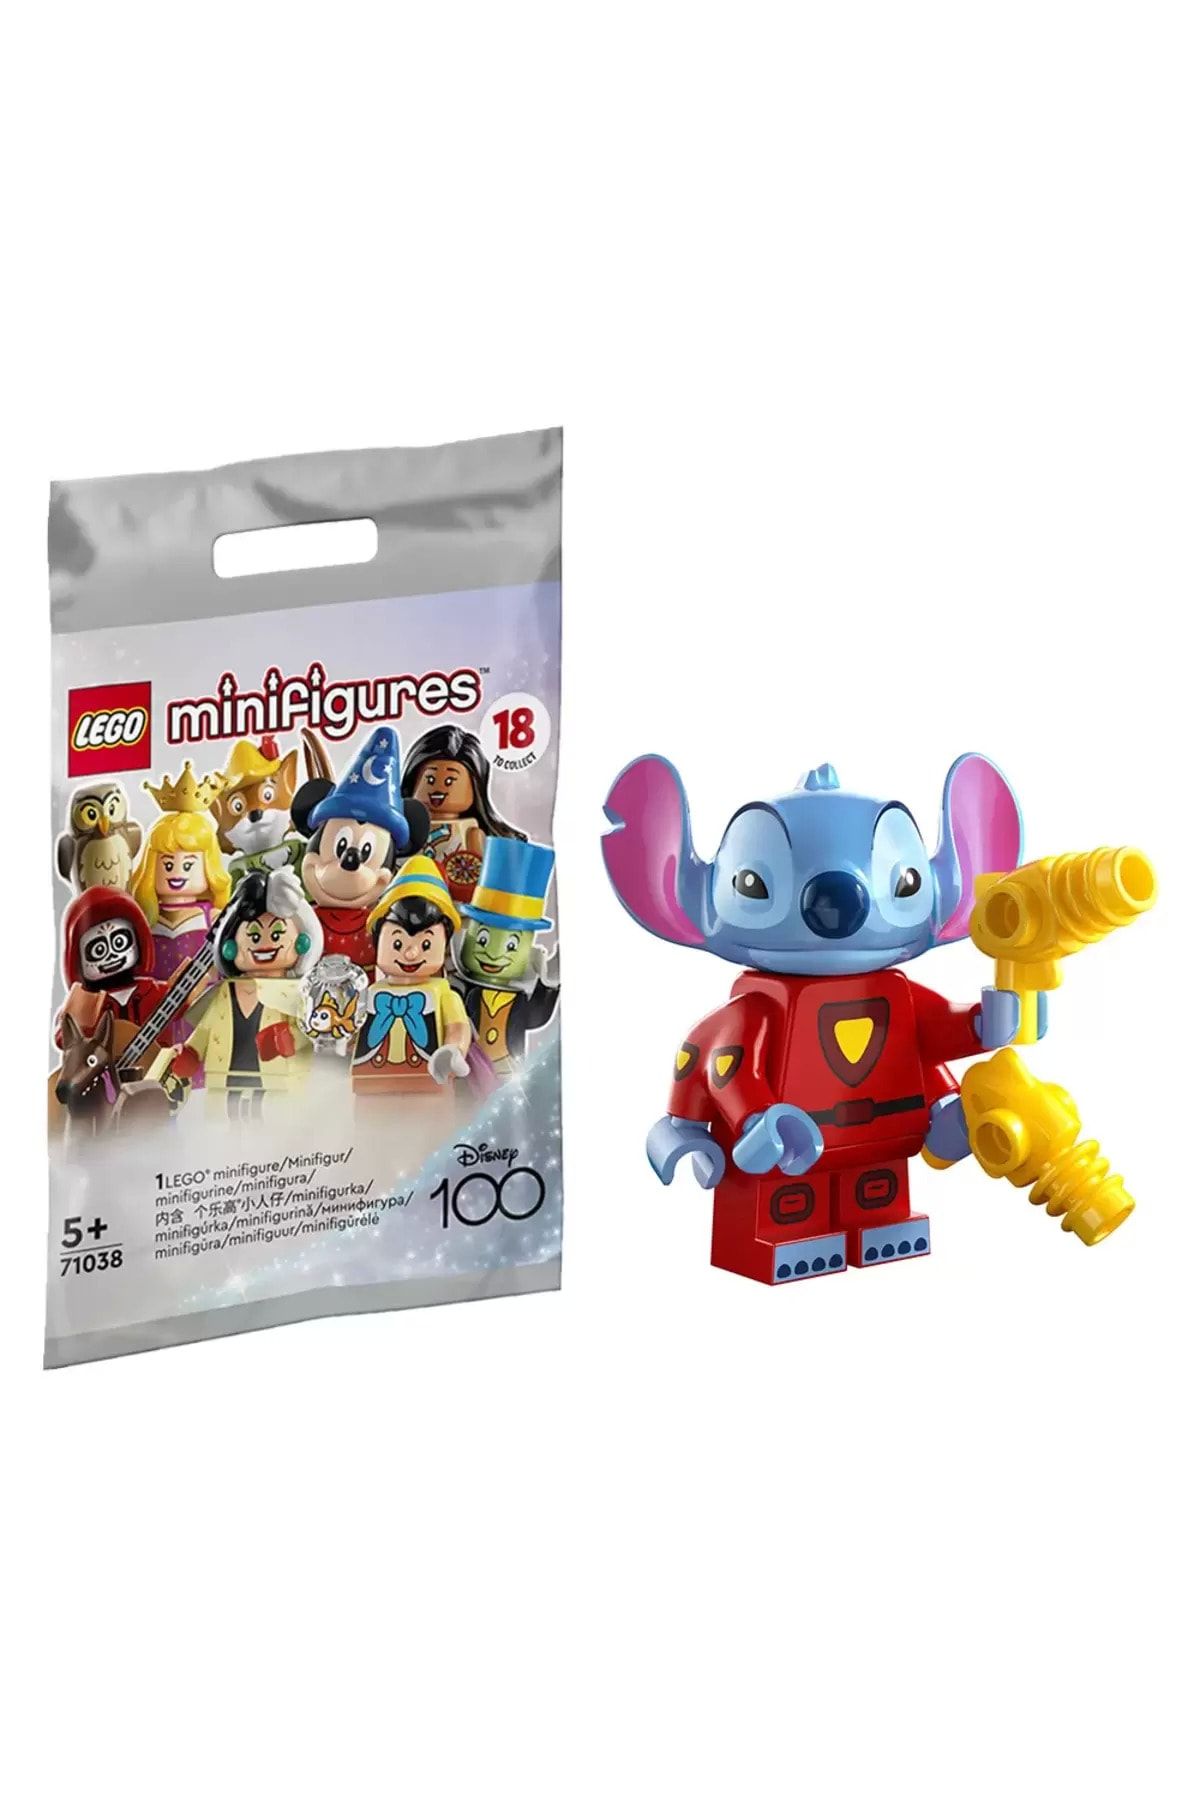 LEGO 71038 Disney 100 Minifigures Stitch 626 - Brand New Open Bag